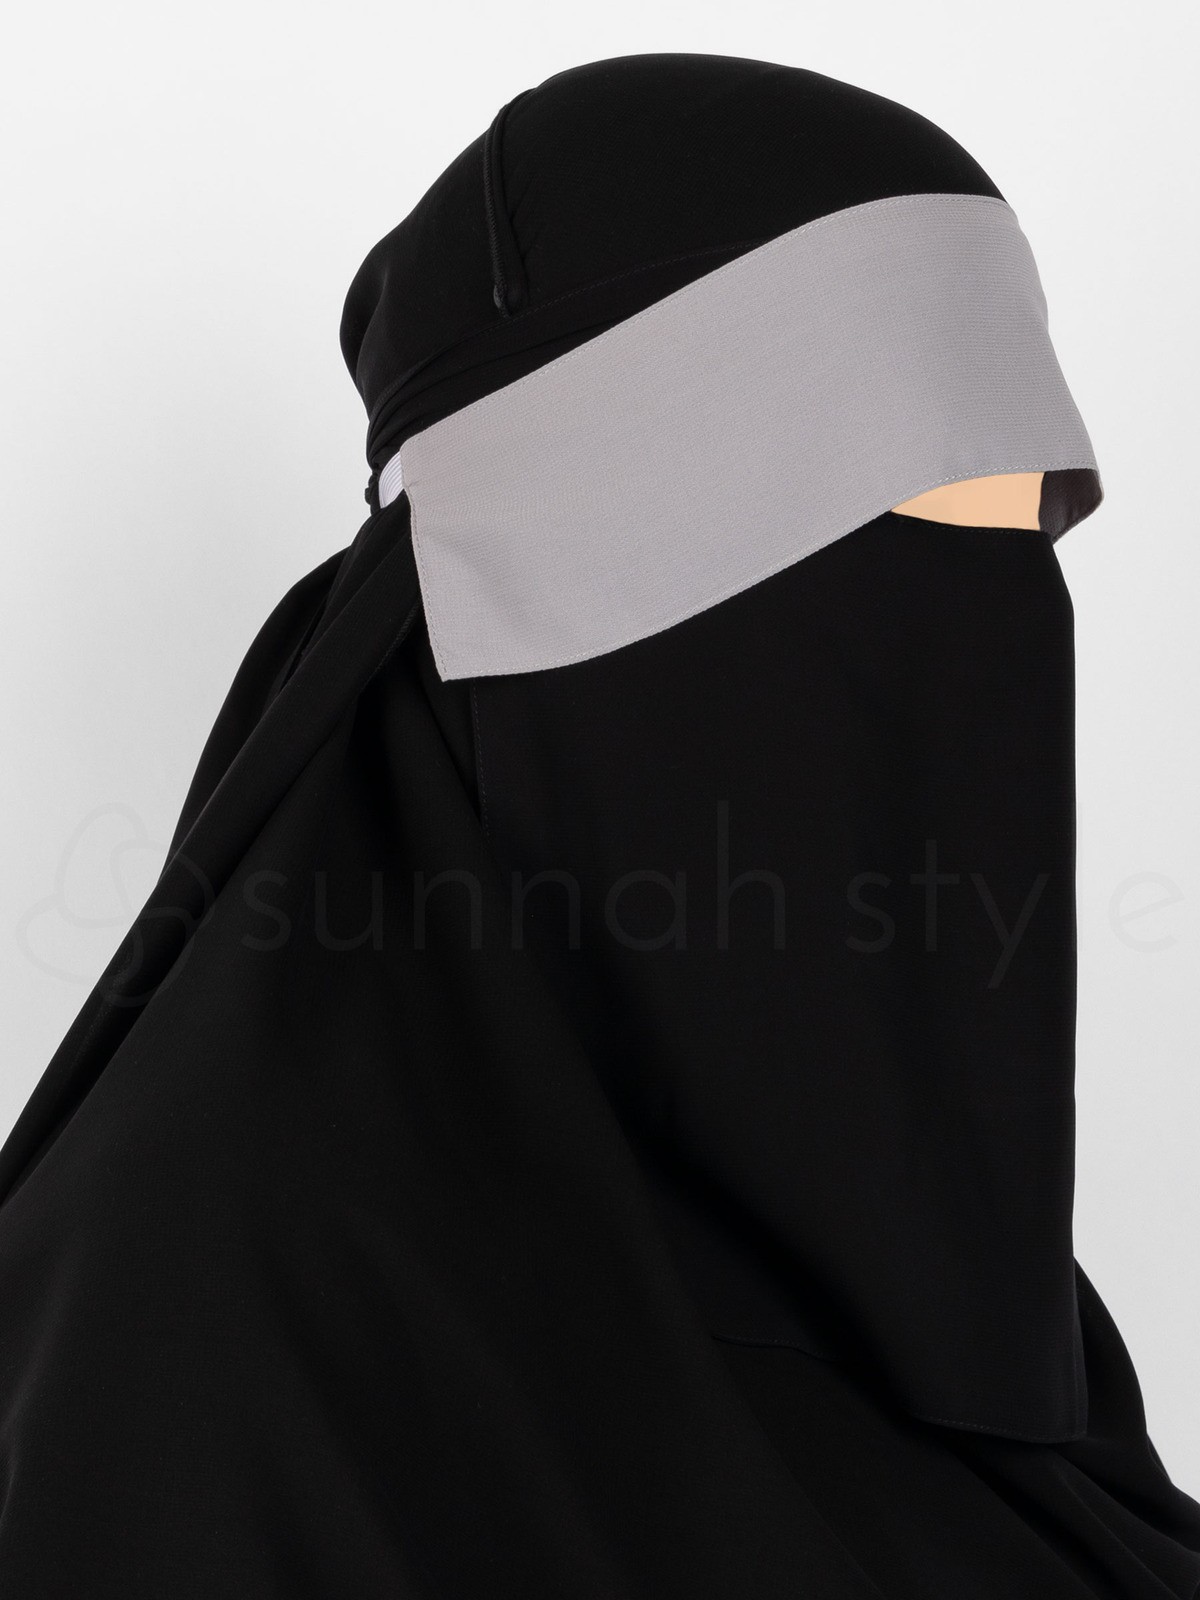 Sunnah Style - Adjustable Niqab Flap (Cement)